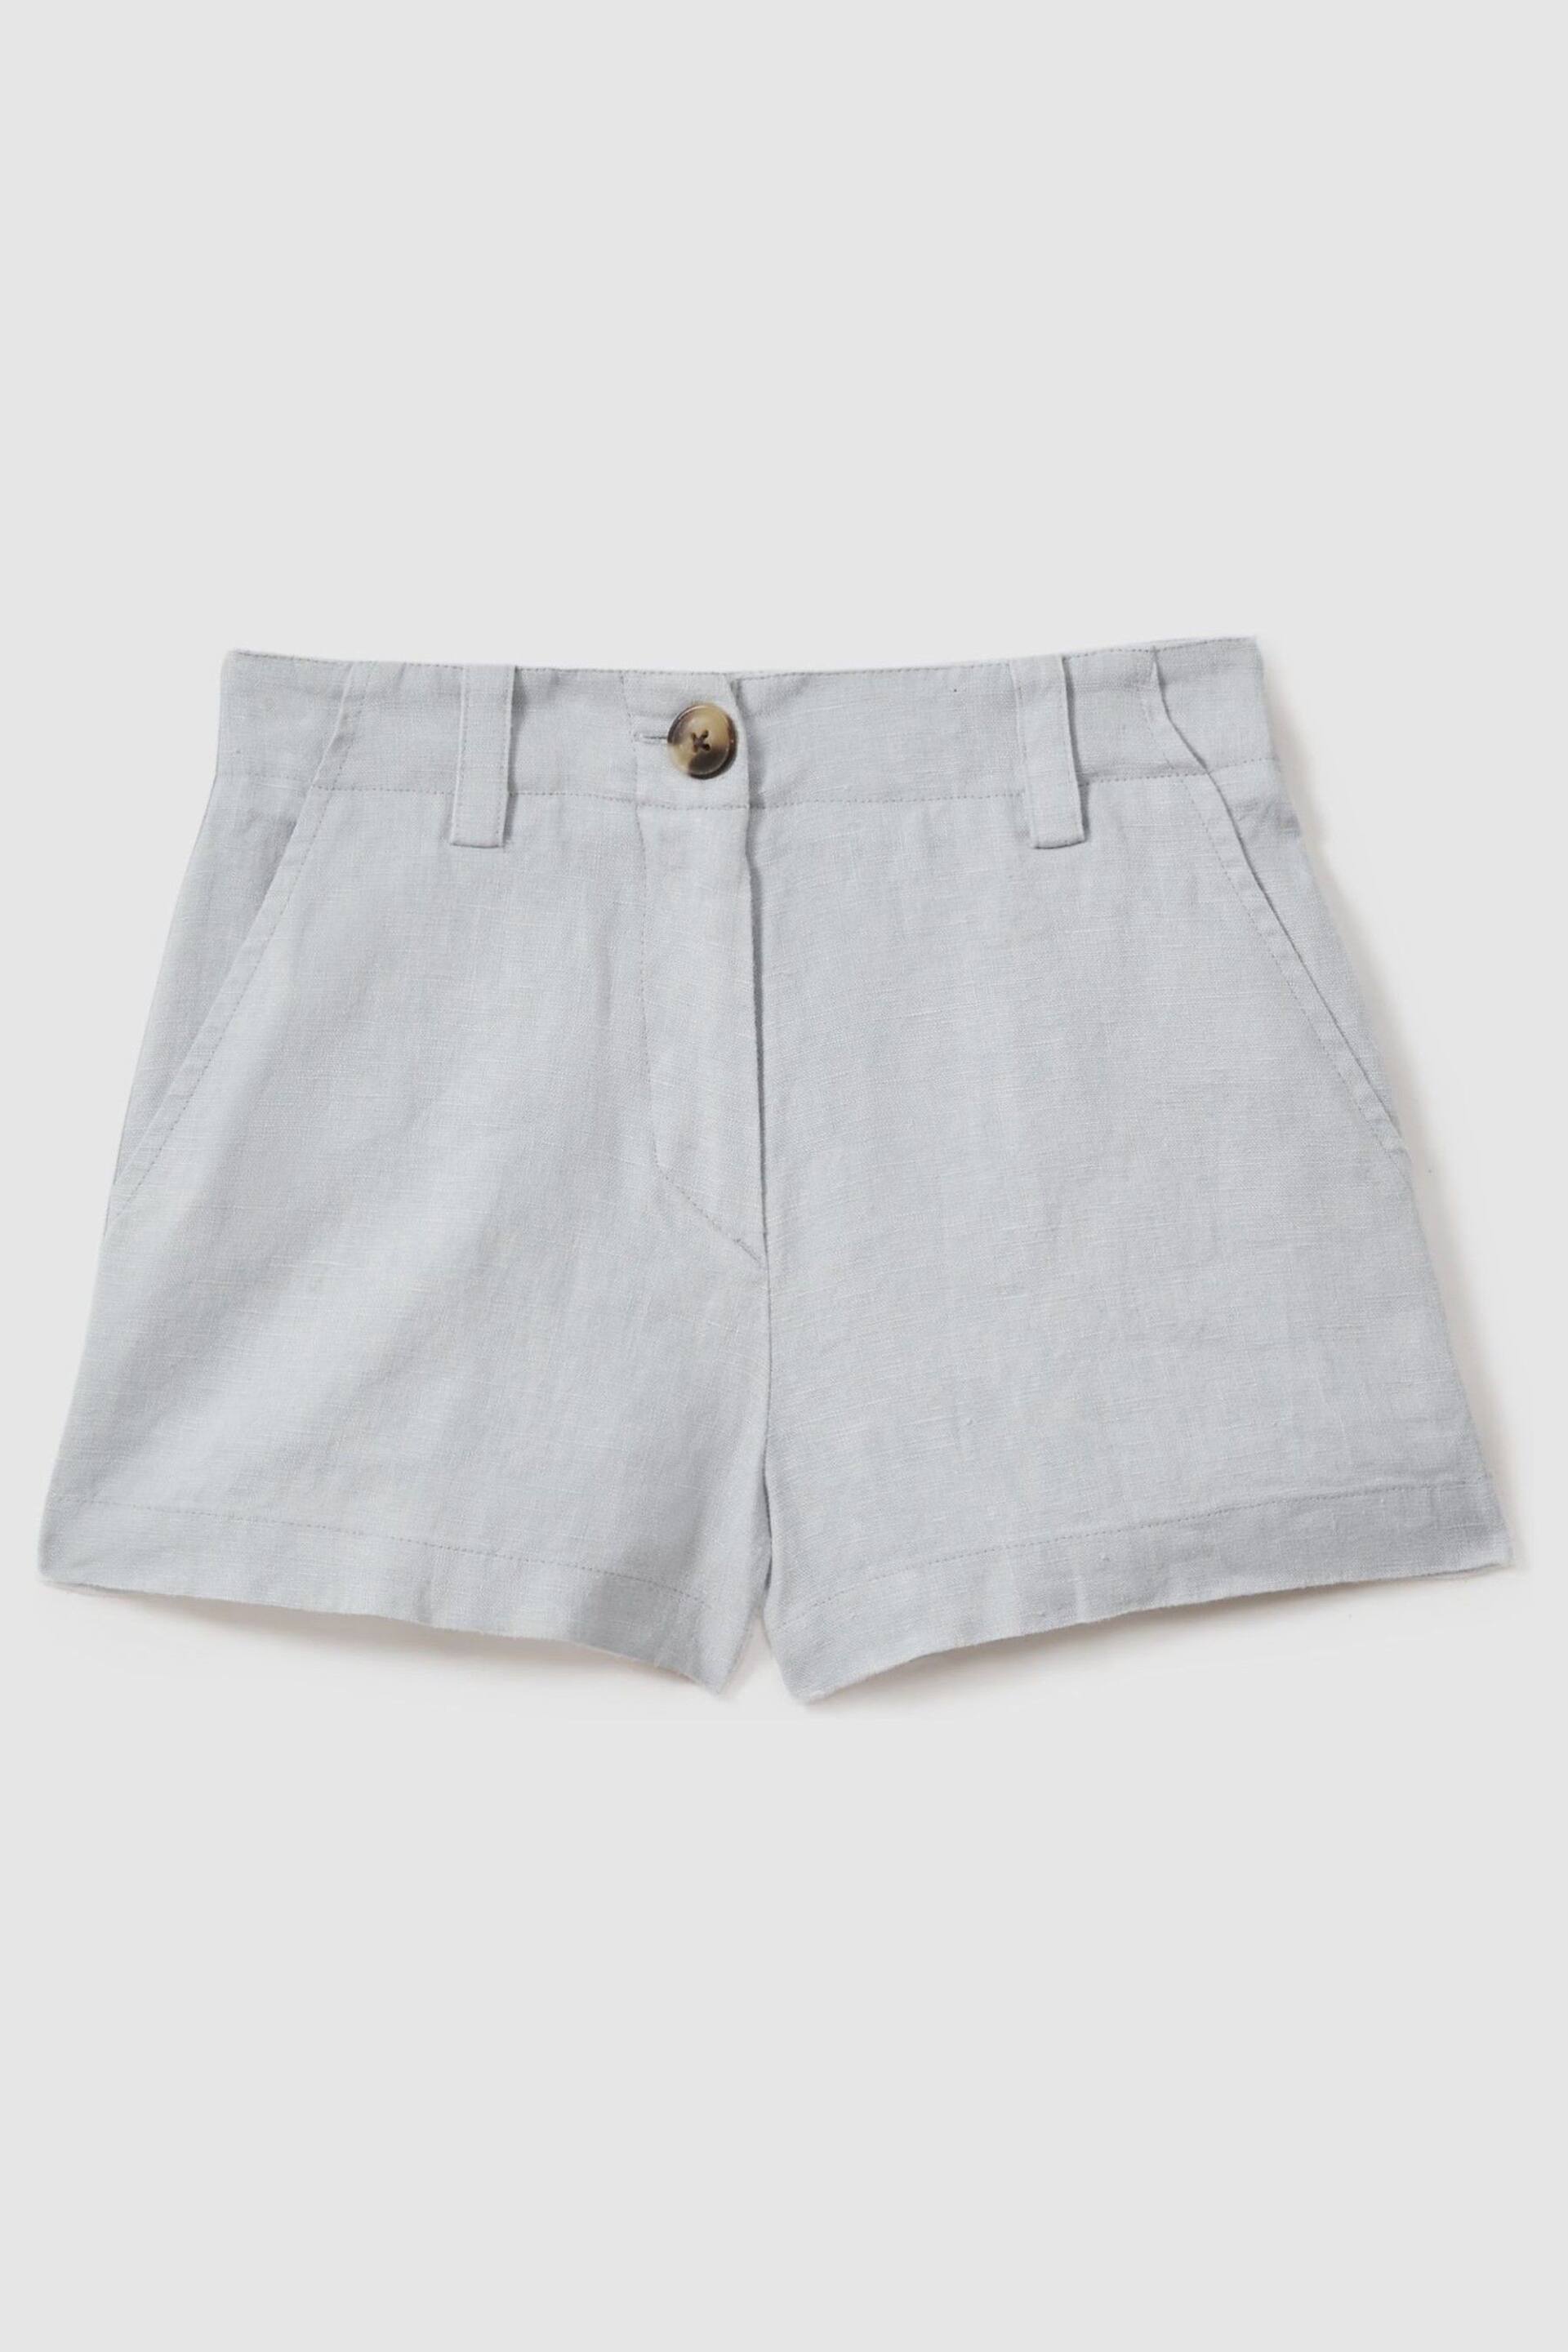 Reiss Blue Dani Teen Linen Loose Fit Shorts - Image 1 of 4